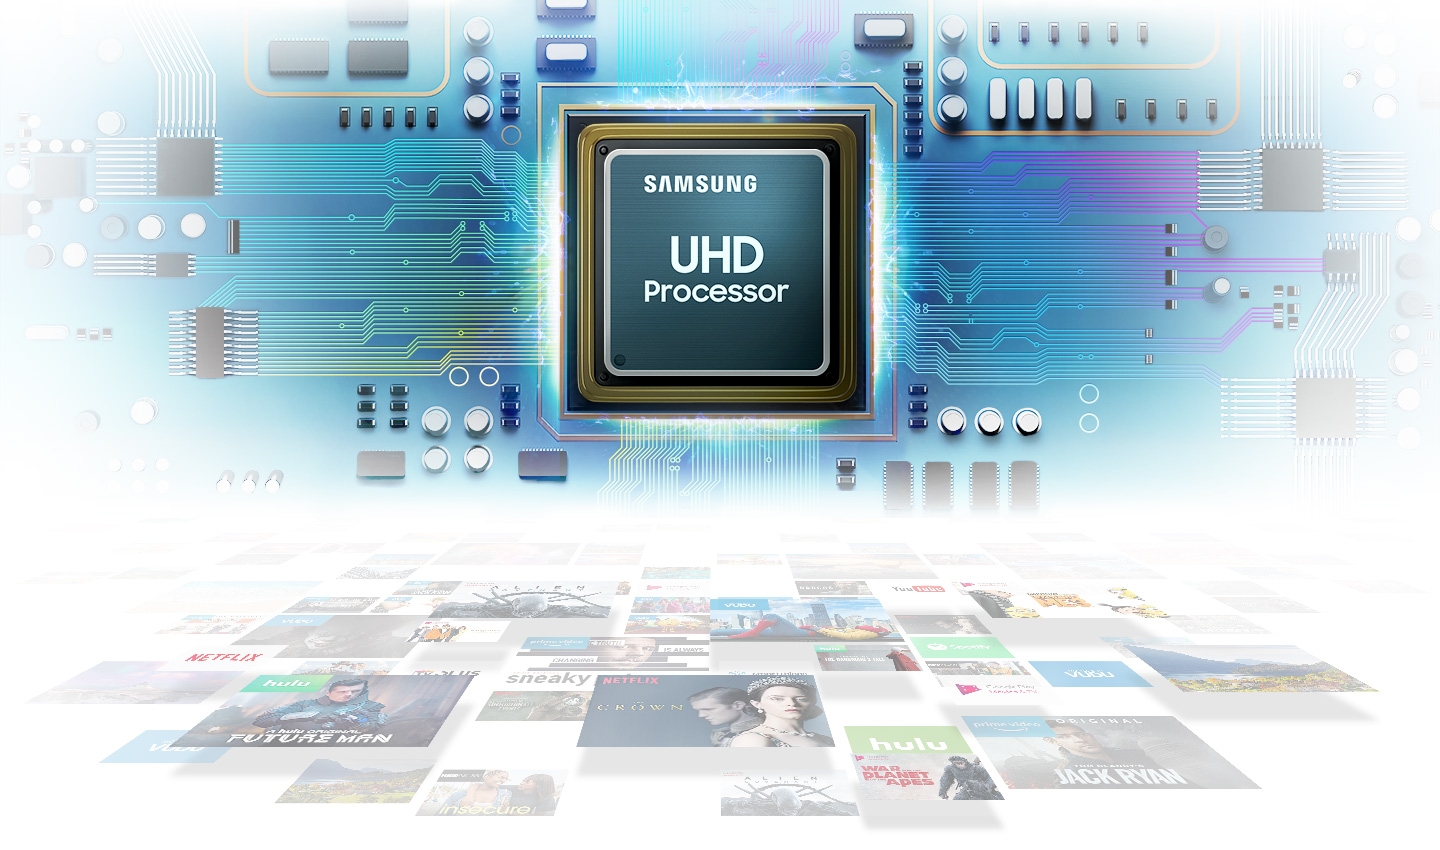 UHD Processor, beautiful image quality